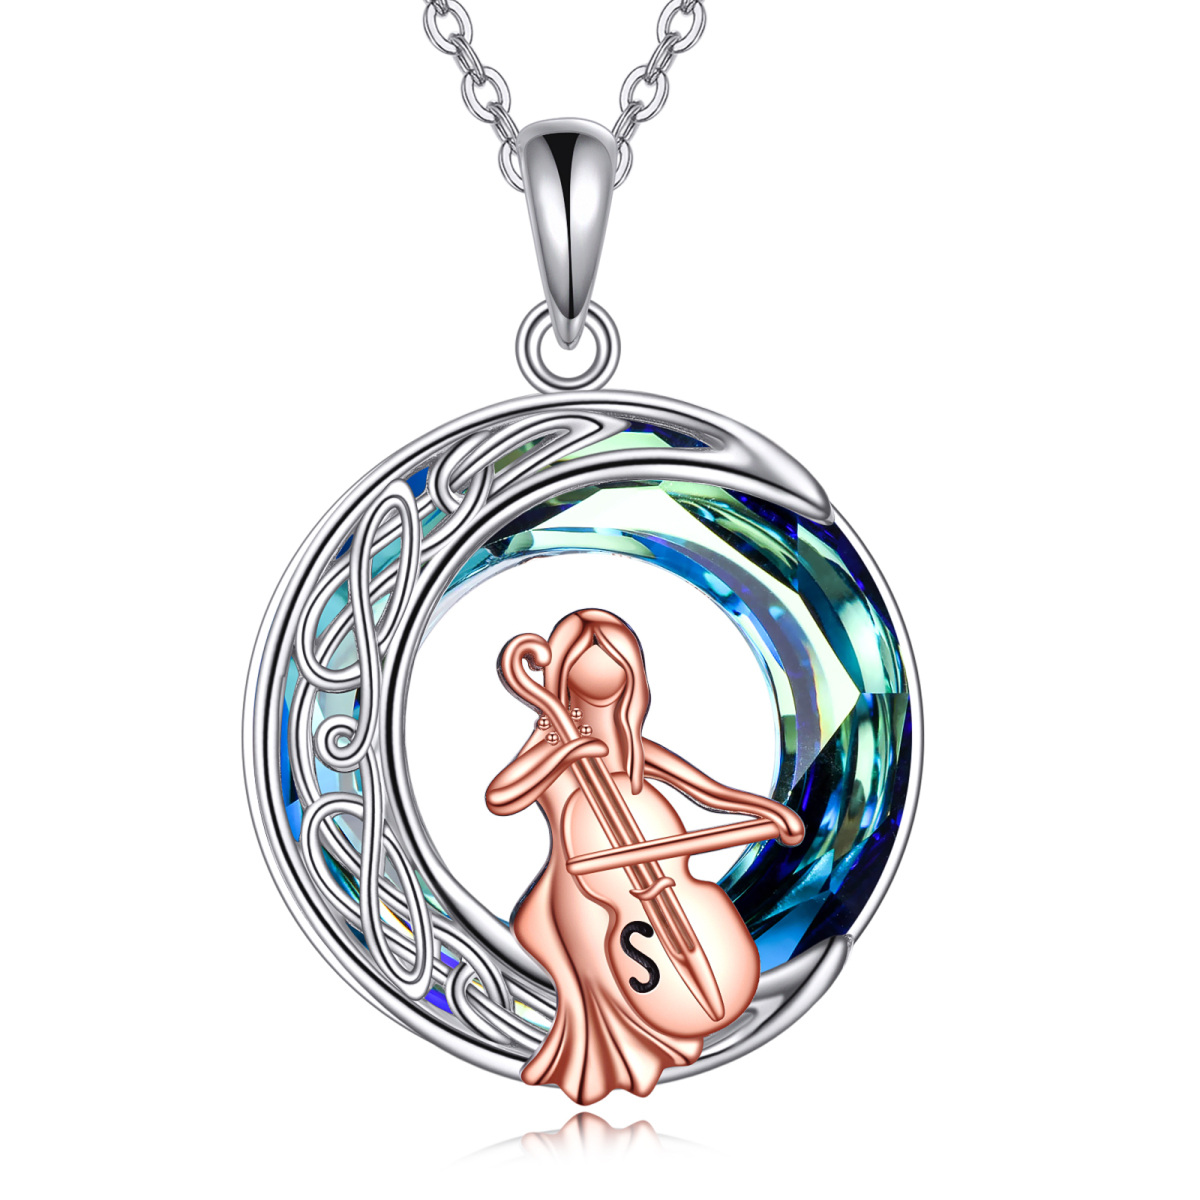 Collar con colgante de cristal con nudo celta de violonchelo en forma circular de plata de ley-1